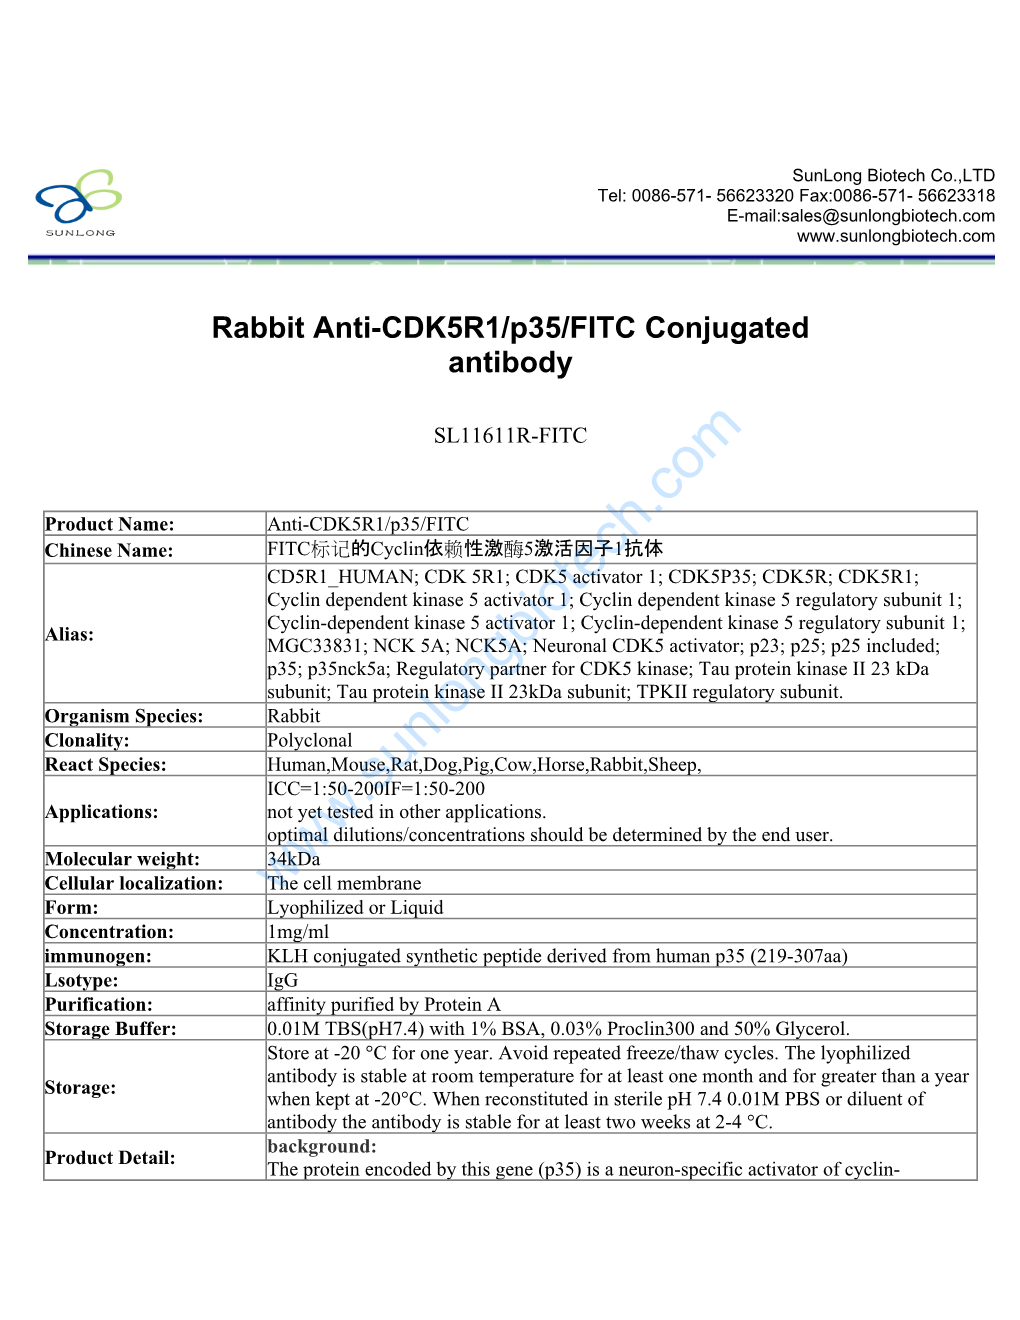 Rabbit Anti-CDK5R1/P35/FITC Conjugated Antibody